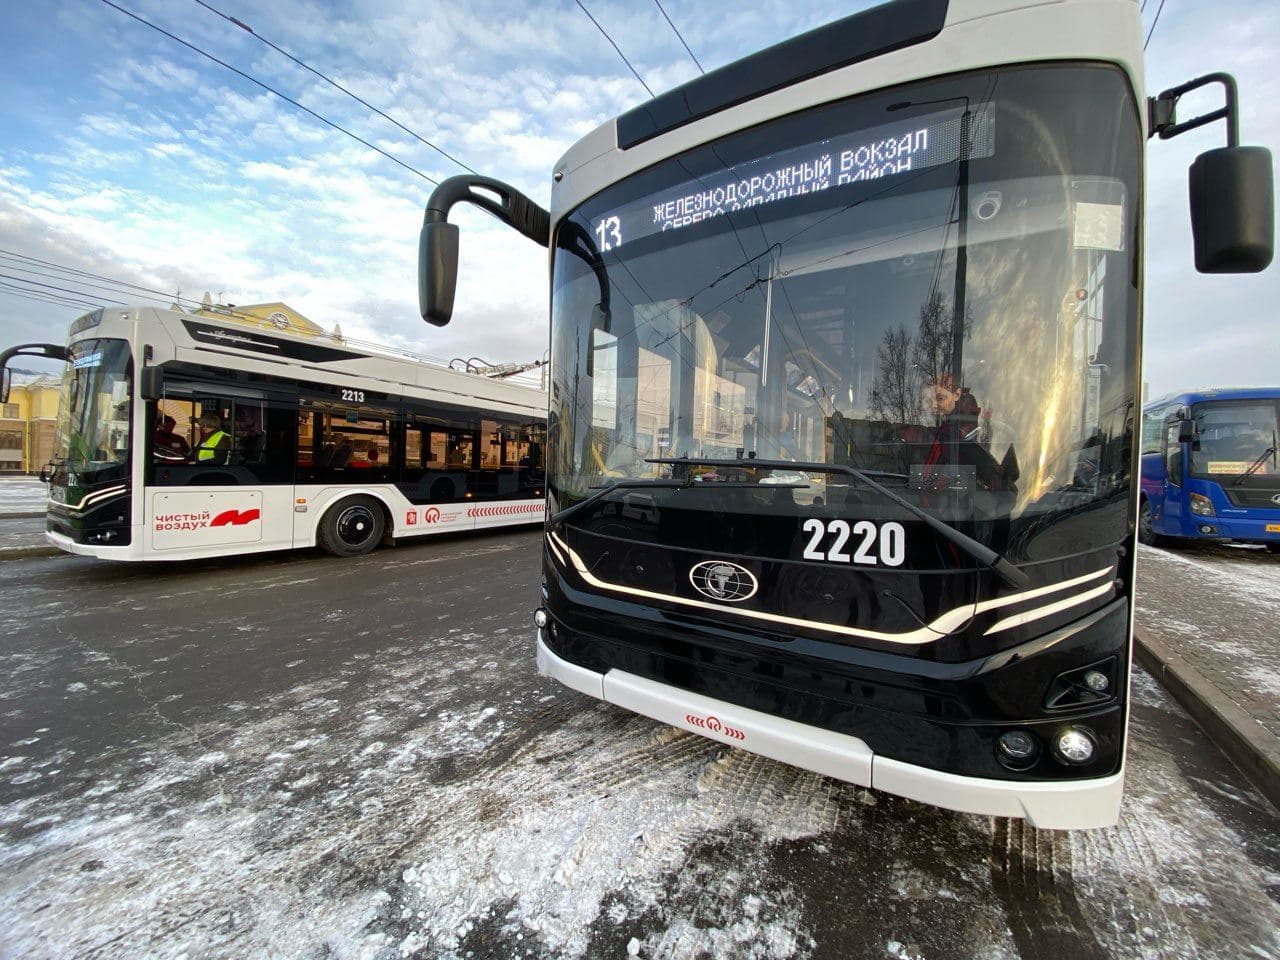 7э курск электробус. Троллейбус Адмирал Красноярск. Адмирал низкопольный троллейбус 6281. «Адмирал» низкопольный троллейбус 6281с увеличенным автономным ходом. Новый троллейбус Адмирал Красноярск.